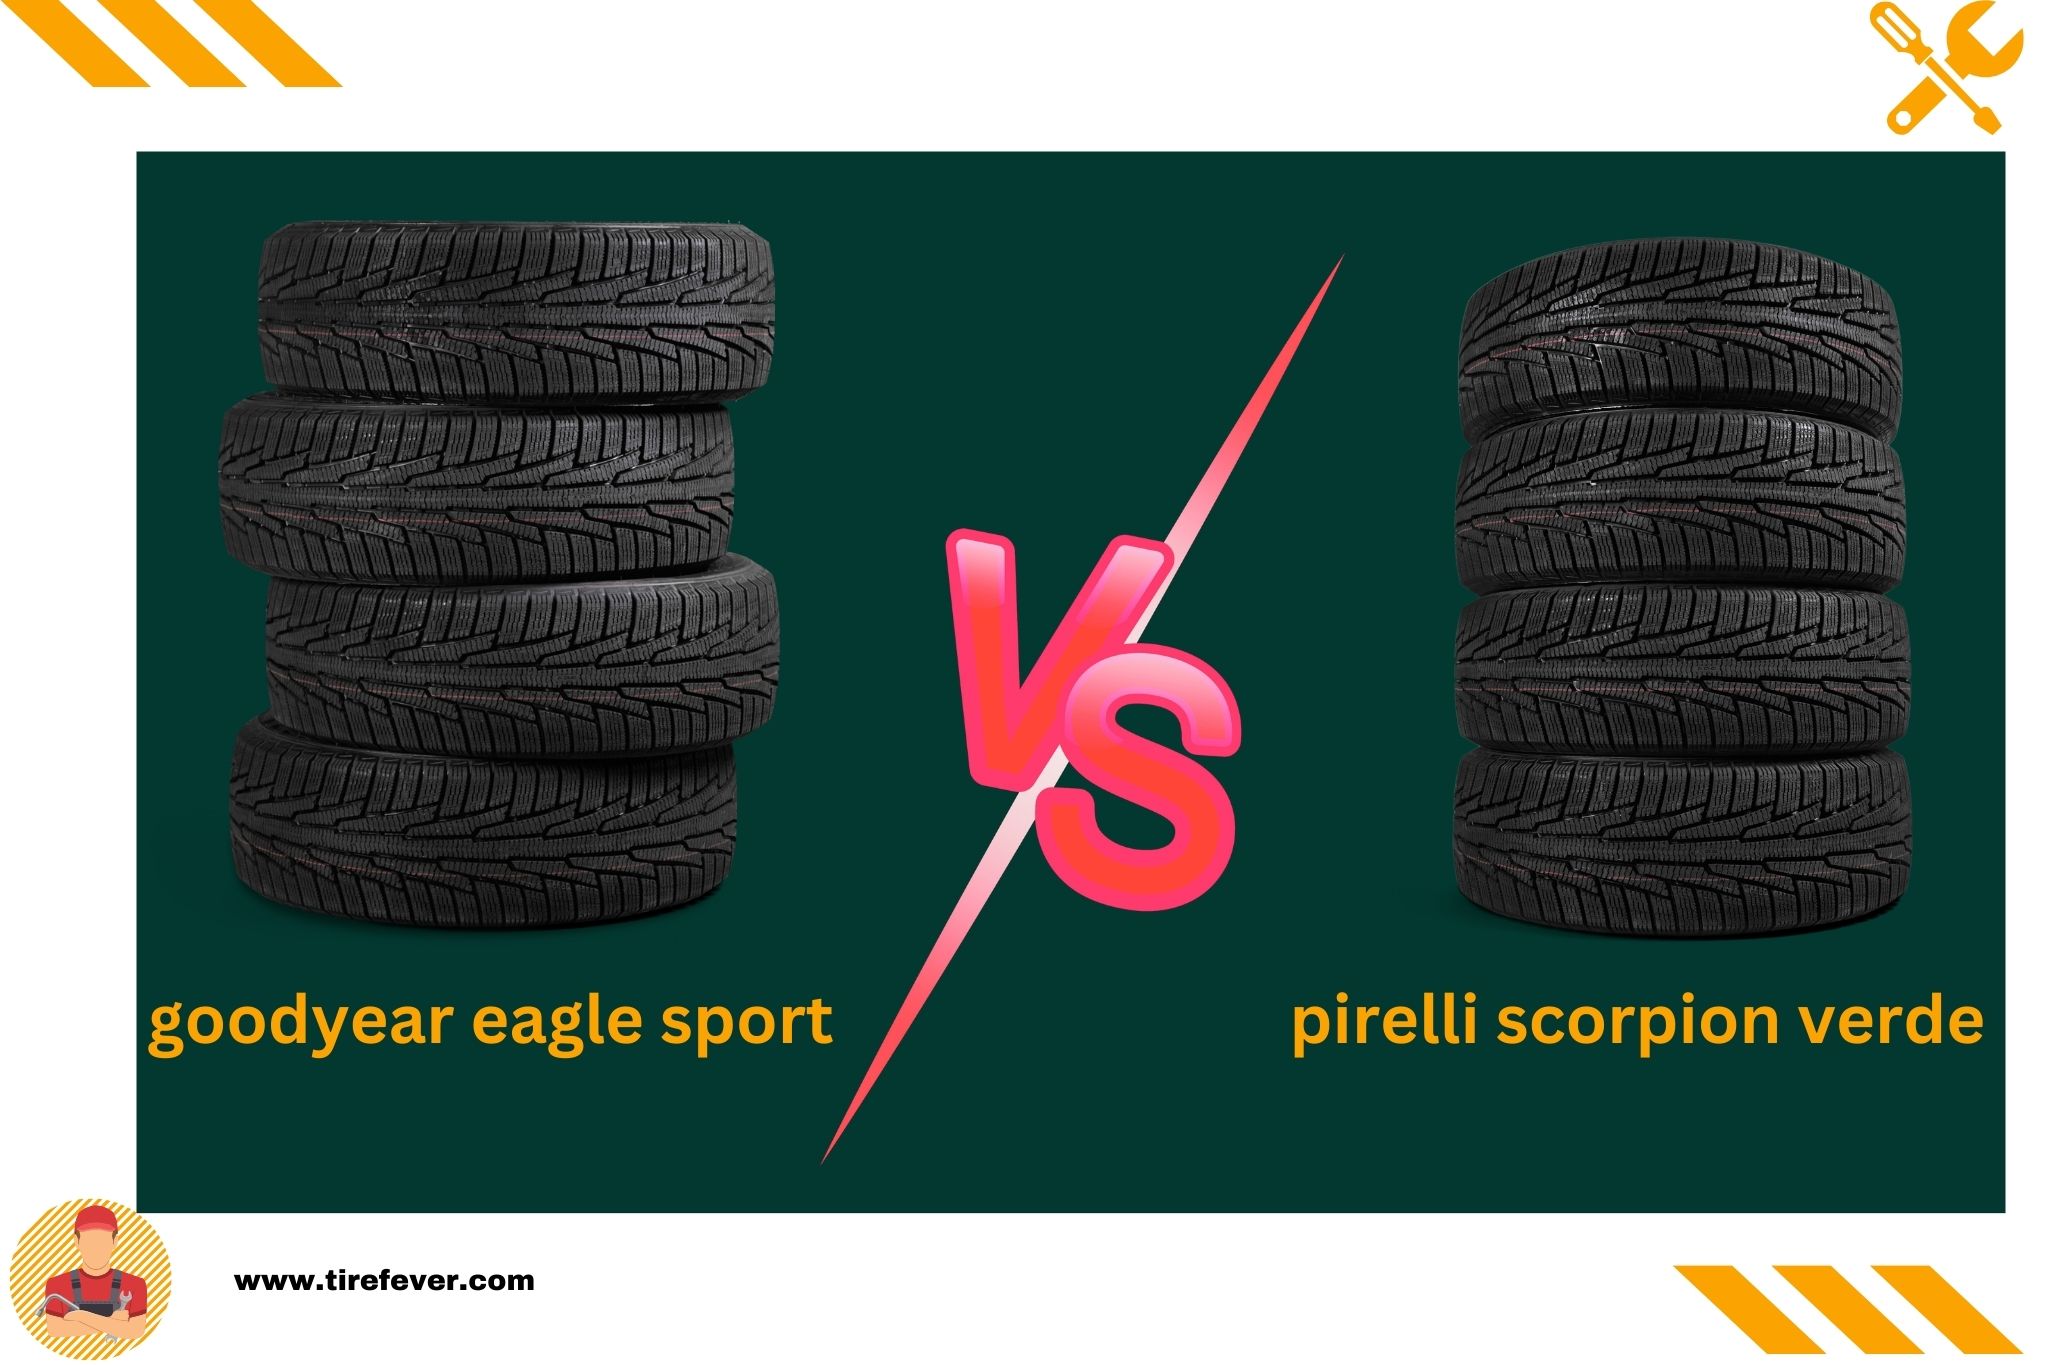 goodyear eagle sport vs pirelli scorpion verde